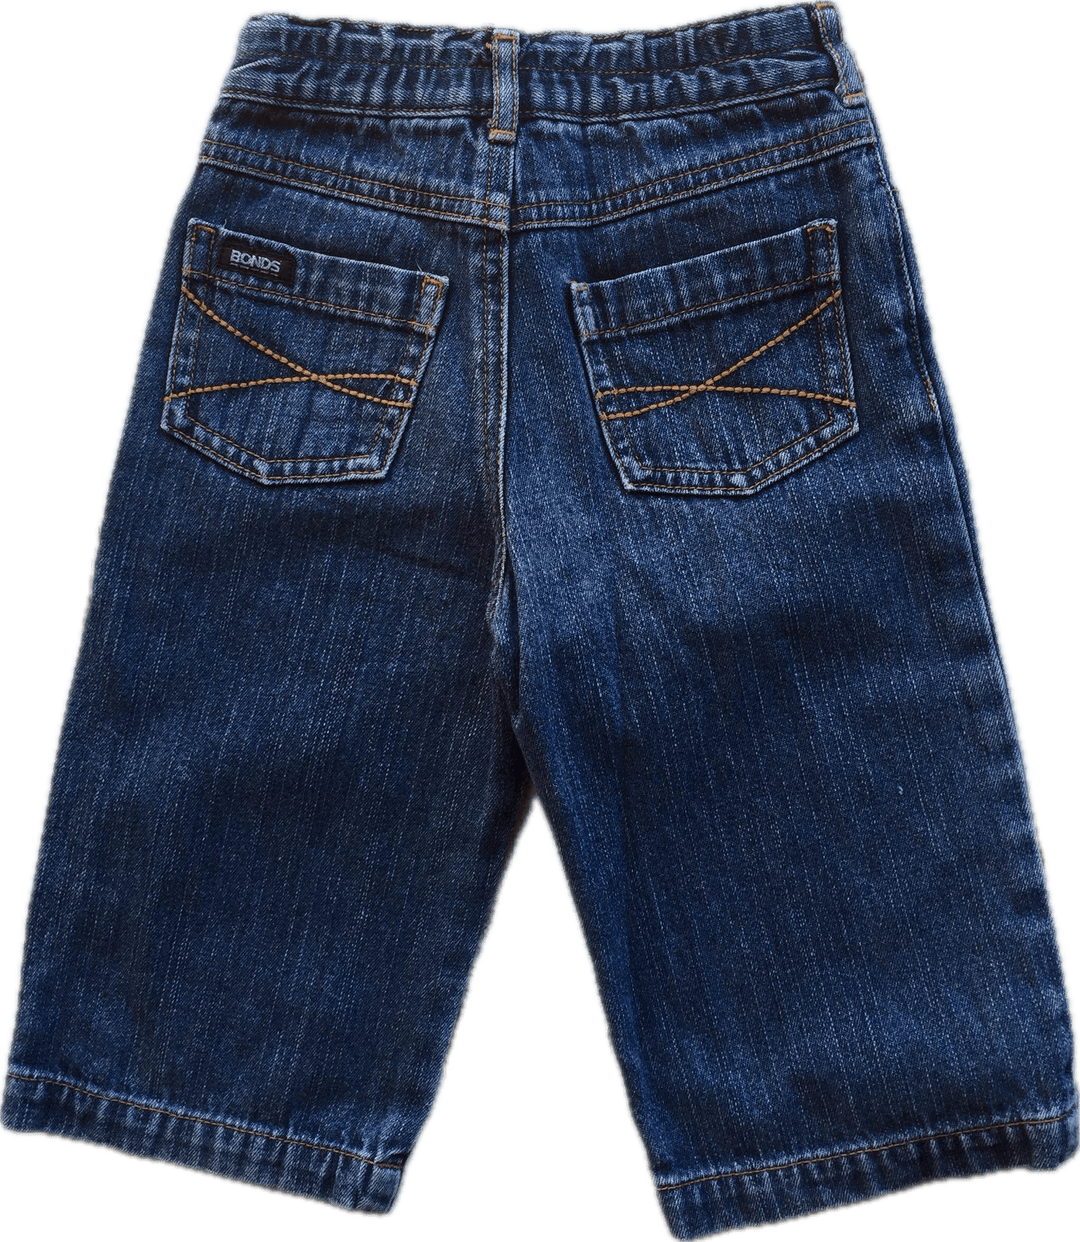 Bonds Boys Denim Jeans - Size 1 - Jean Pool